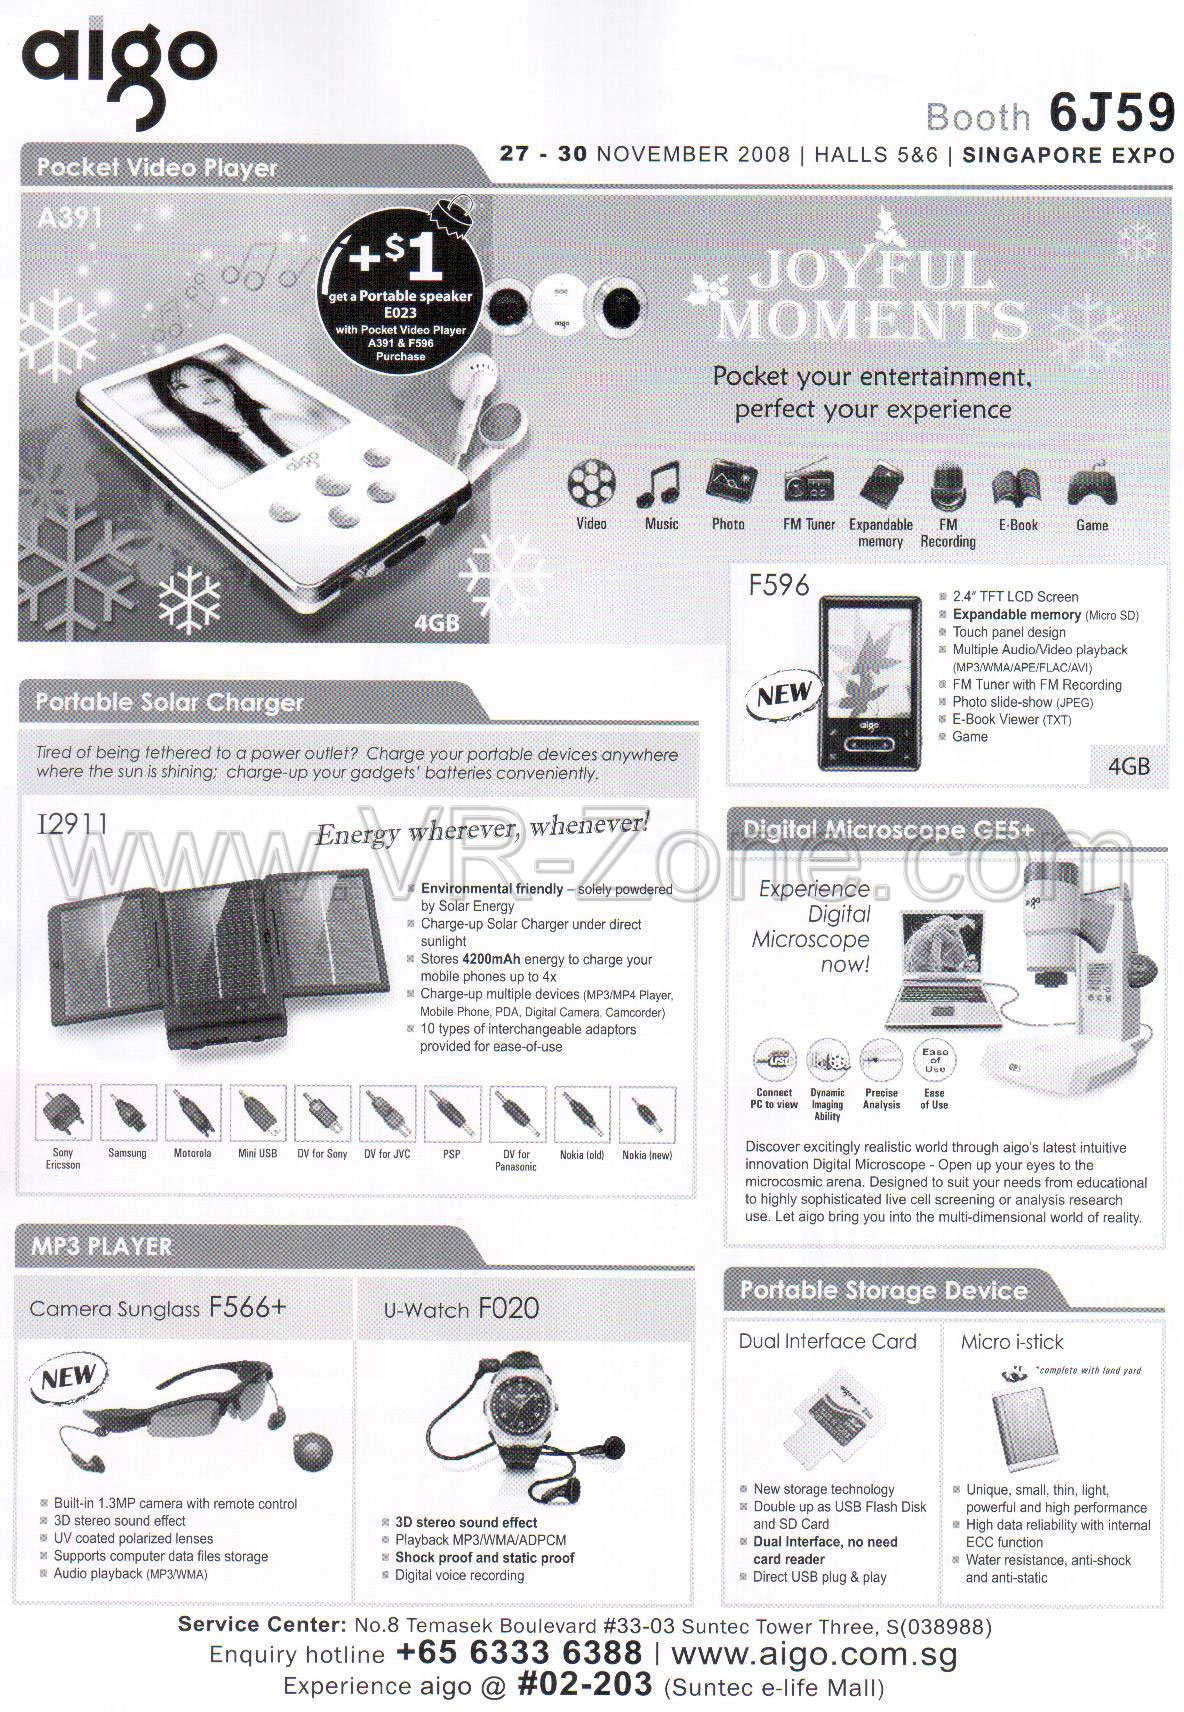 Sitex 2008 price list image brochure of Aigo 2